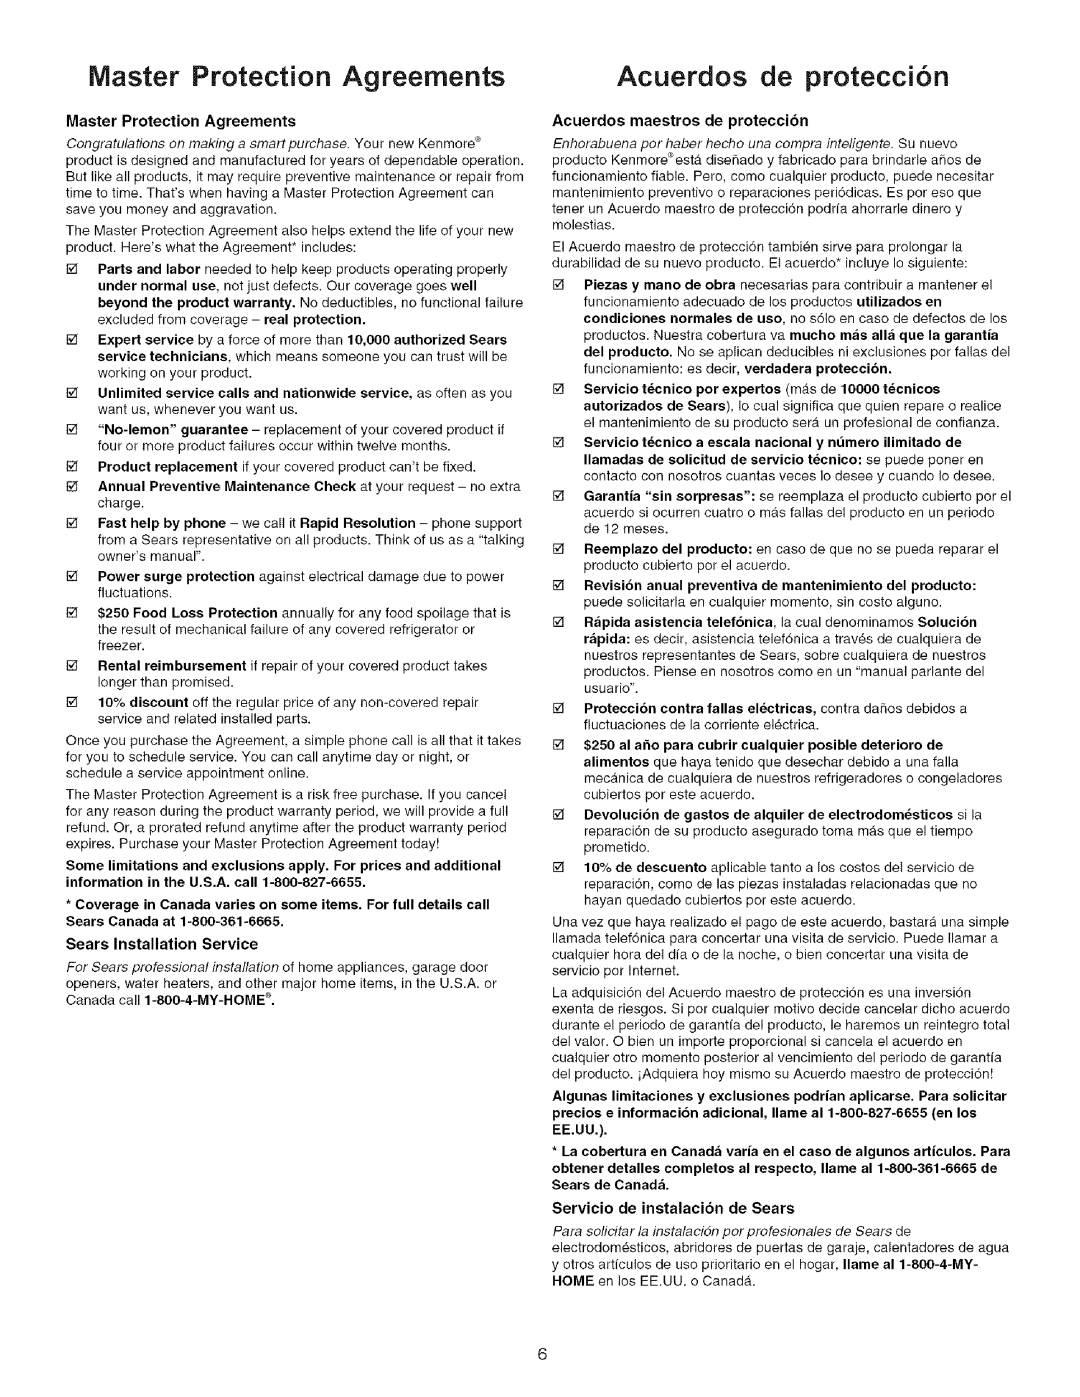 Kenmore 790.7943 manual Master Protection Agreements, Acuerdos de protecci6n, Sears Installation Service 